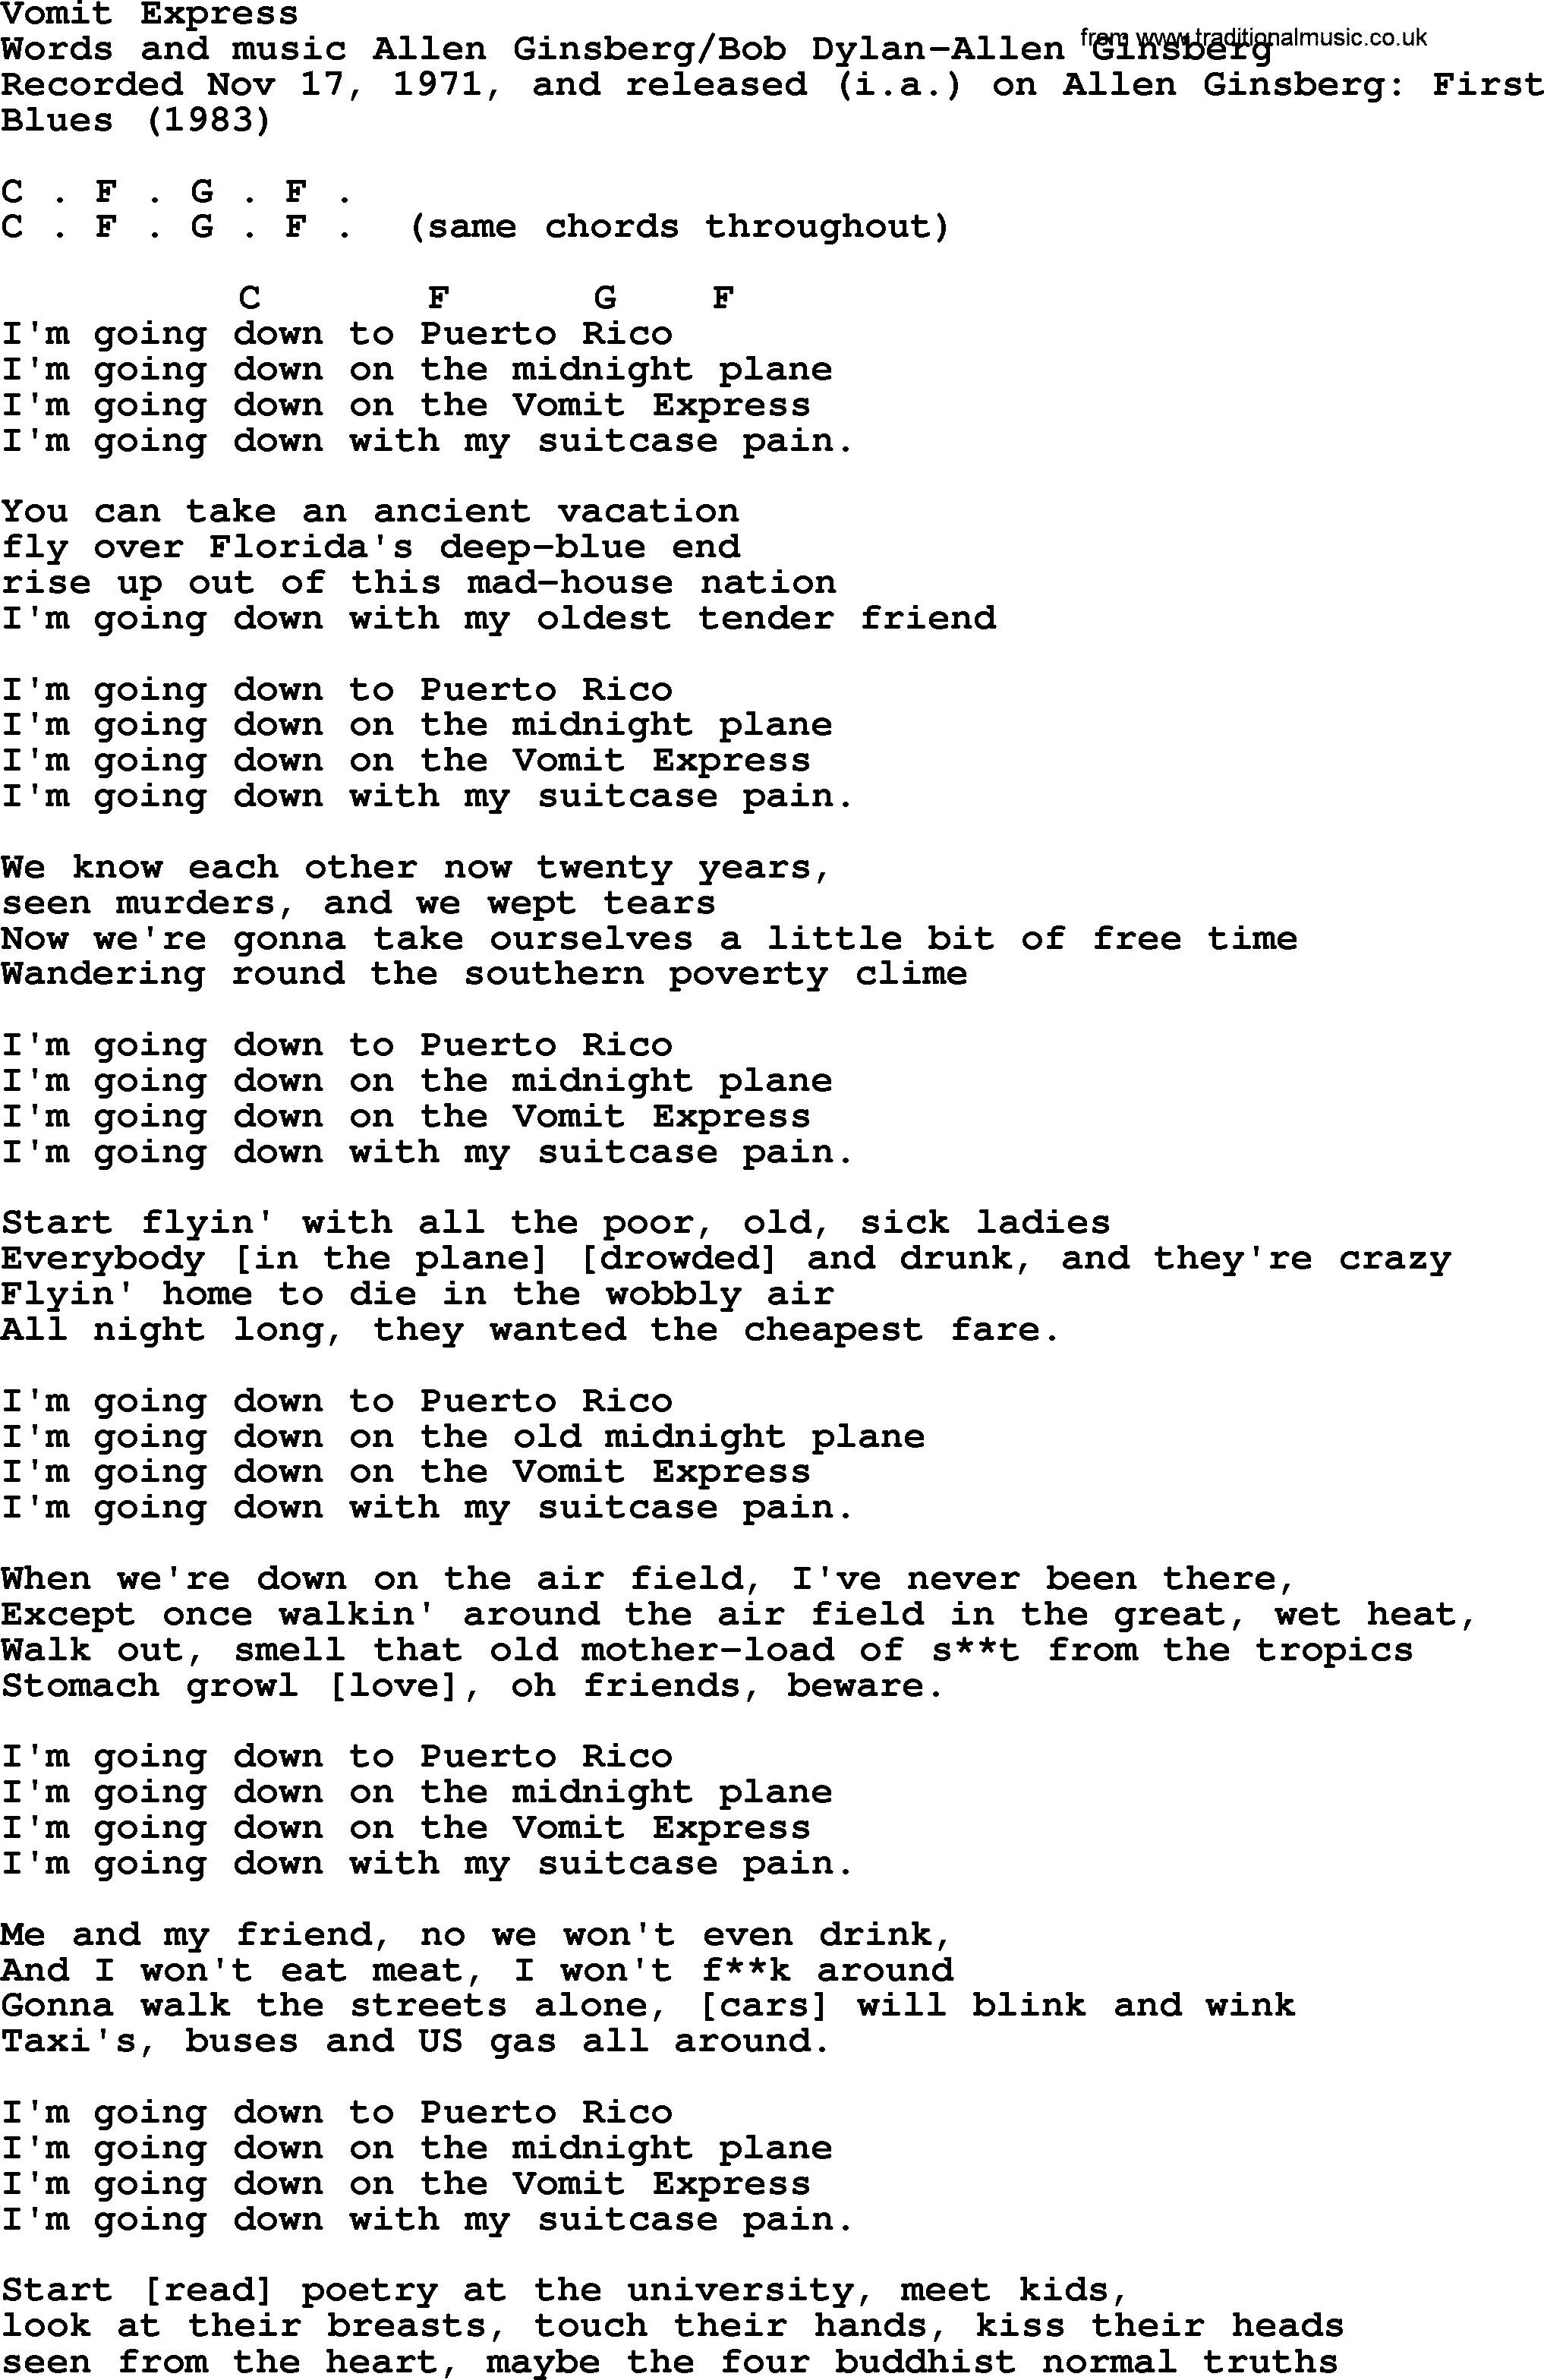 Bob Dylan song, lyrics with chords - Vomit Express